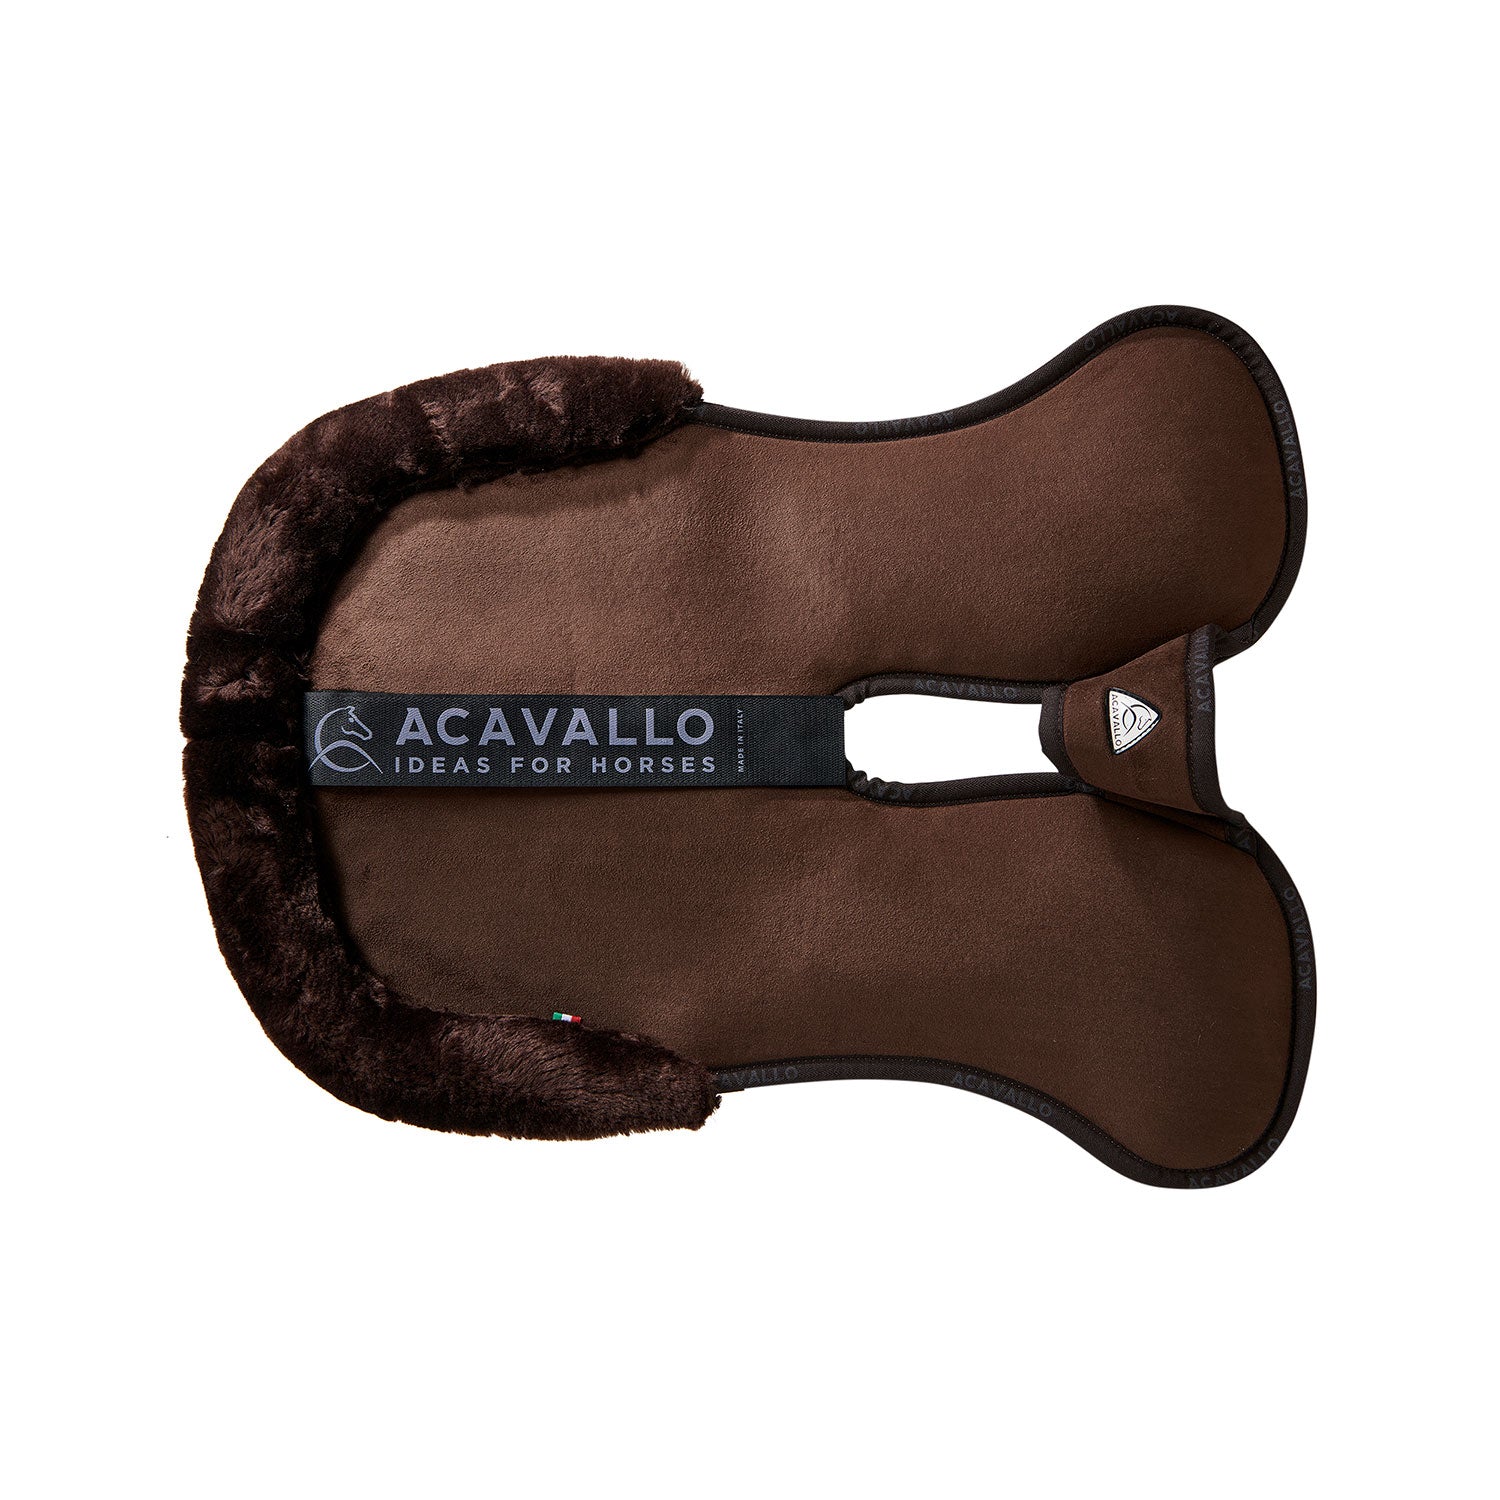 Adjustable memory foam saddle pad in brown